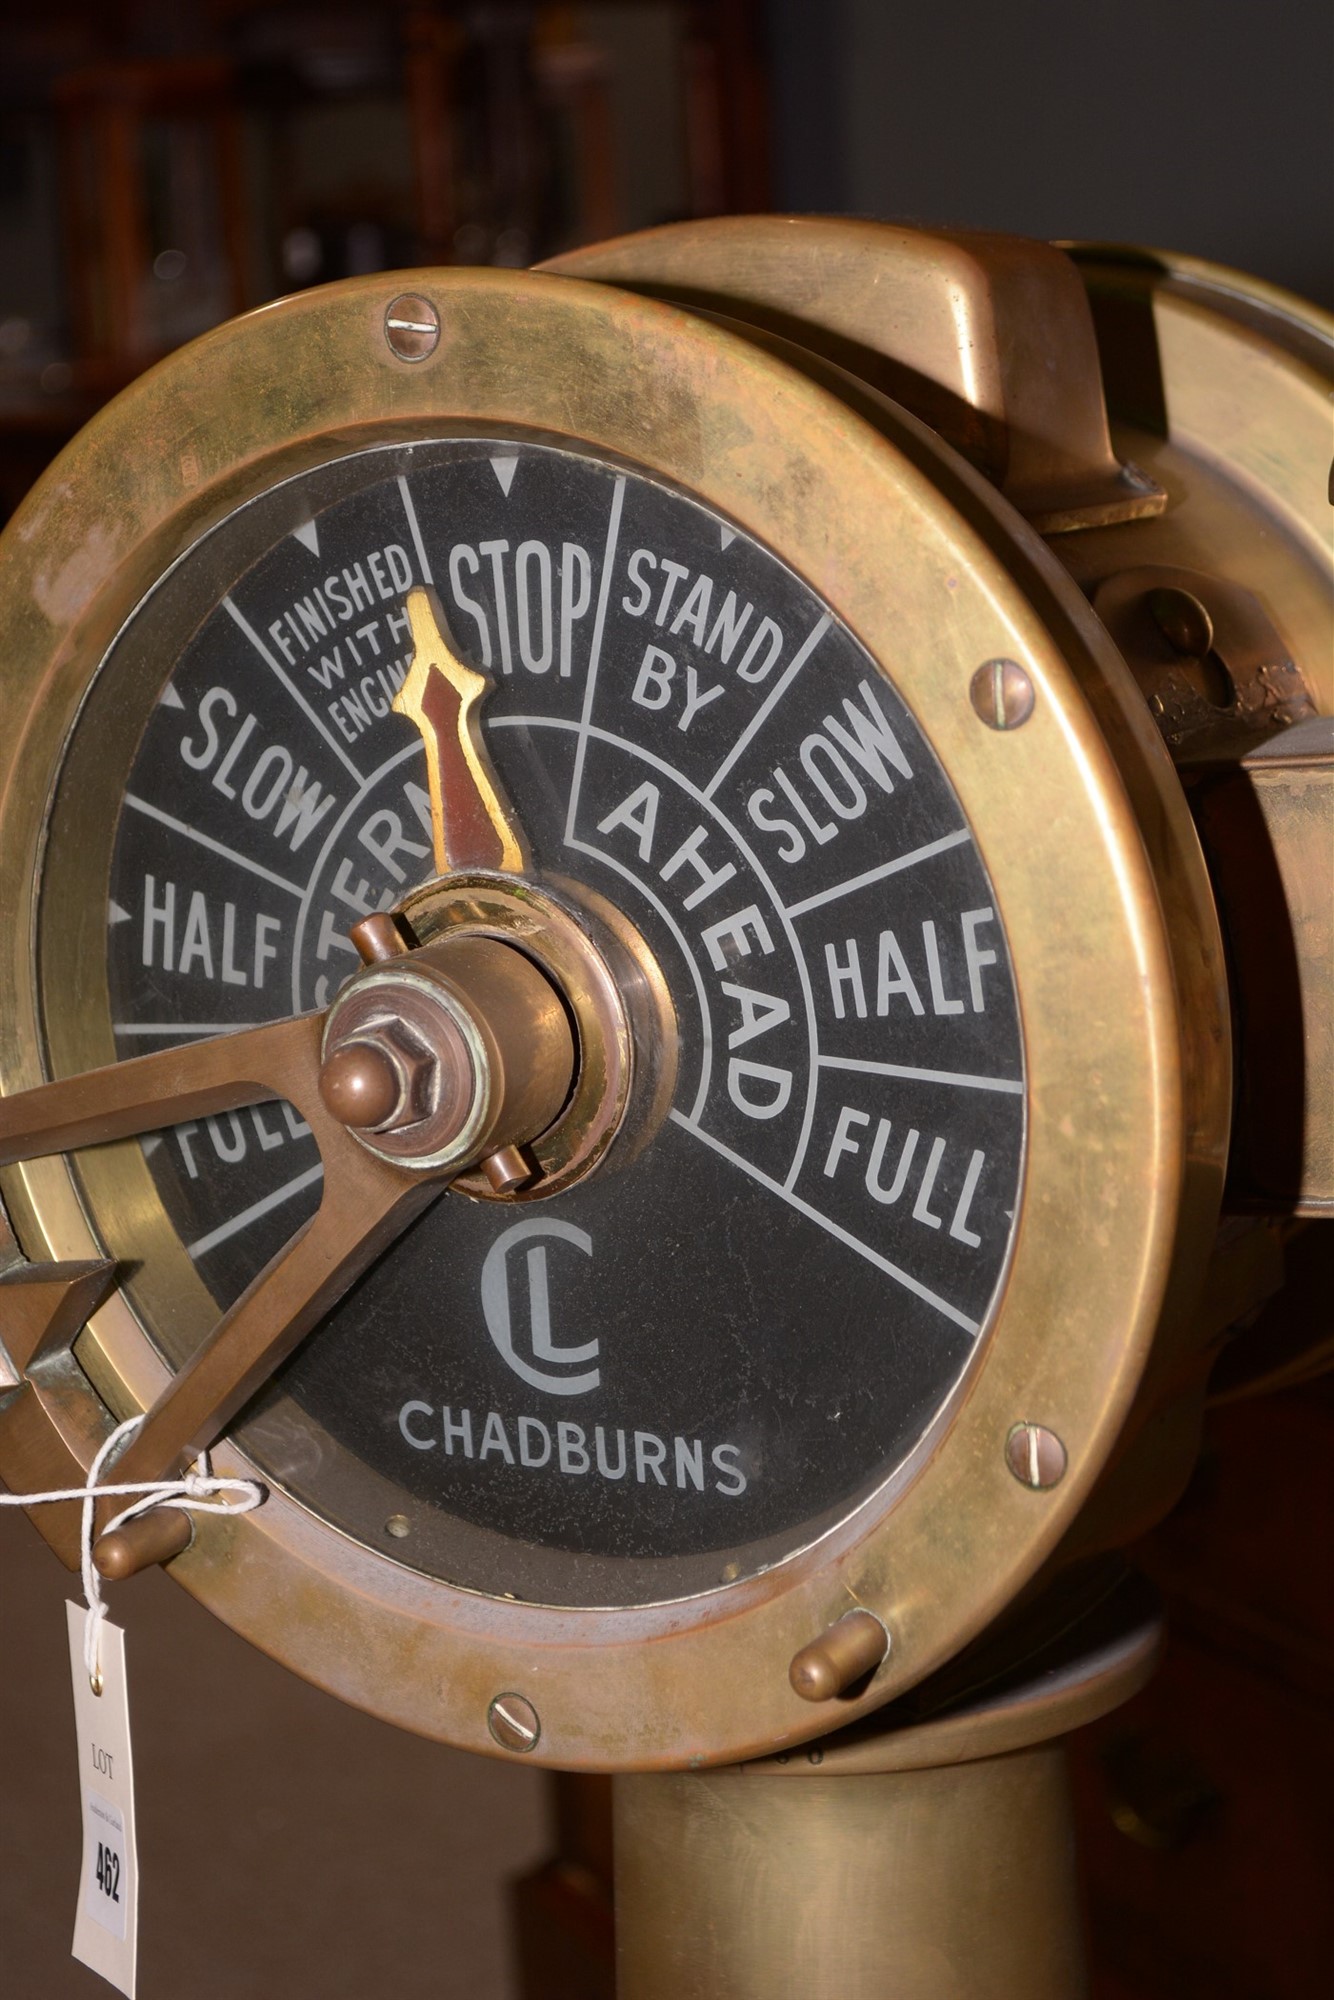 Chadburns ships telegraph - Image 8 of 8